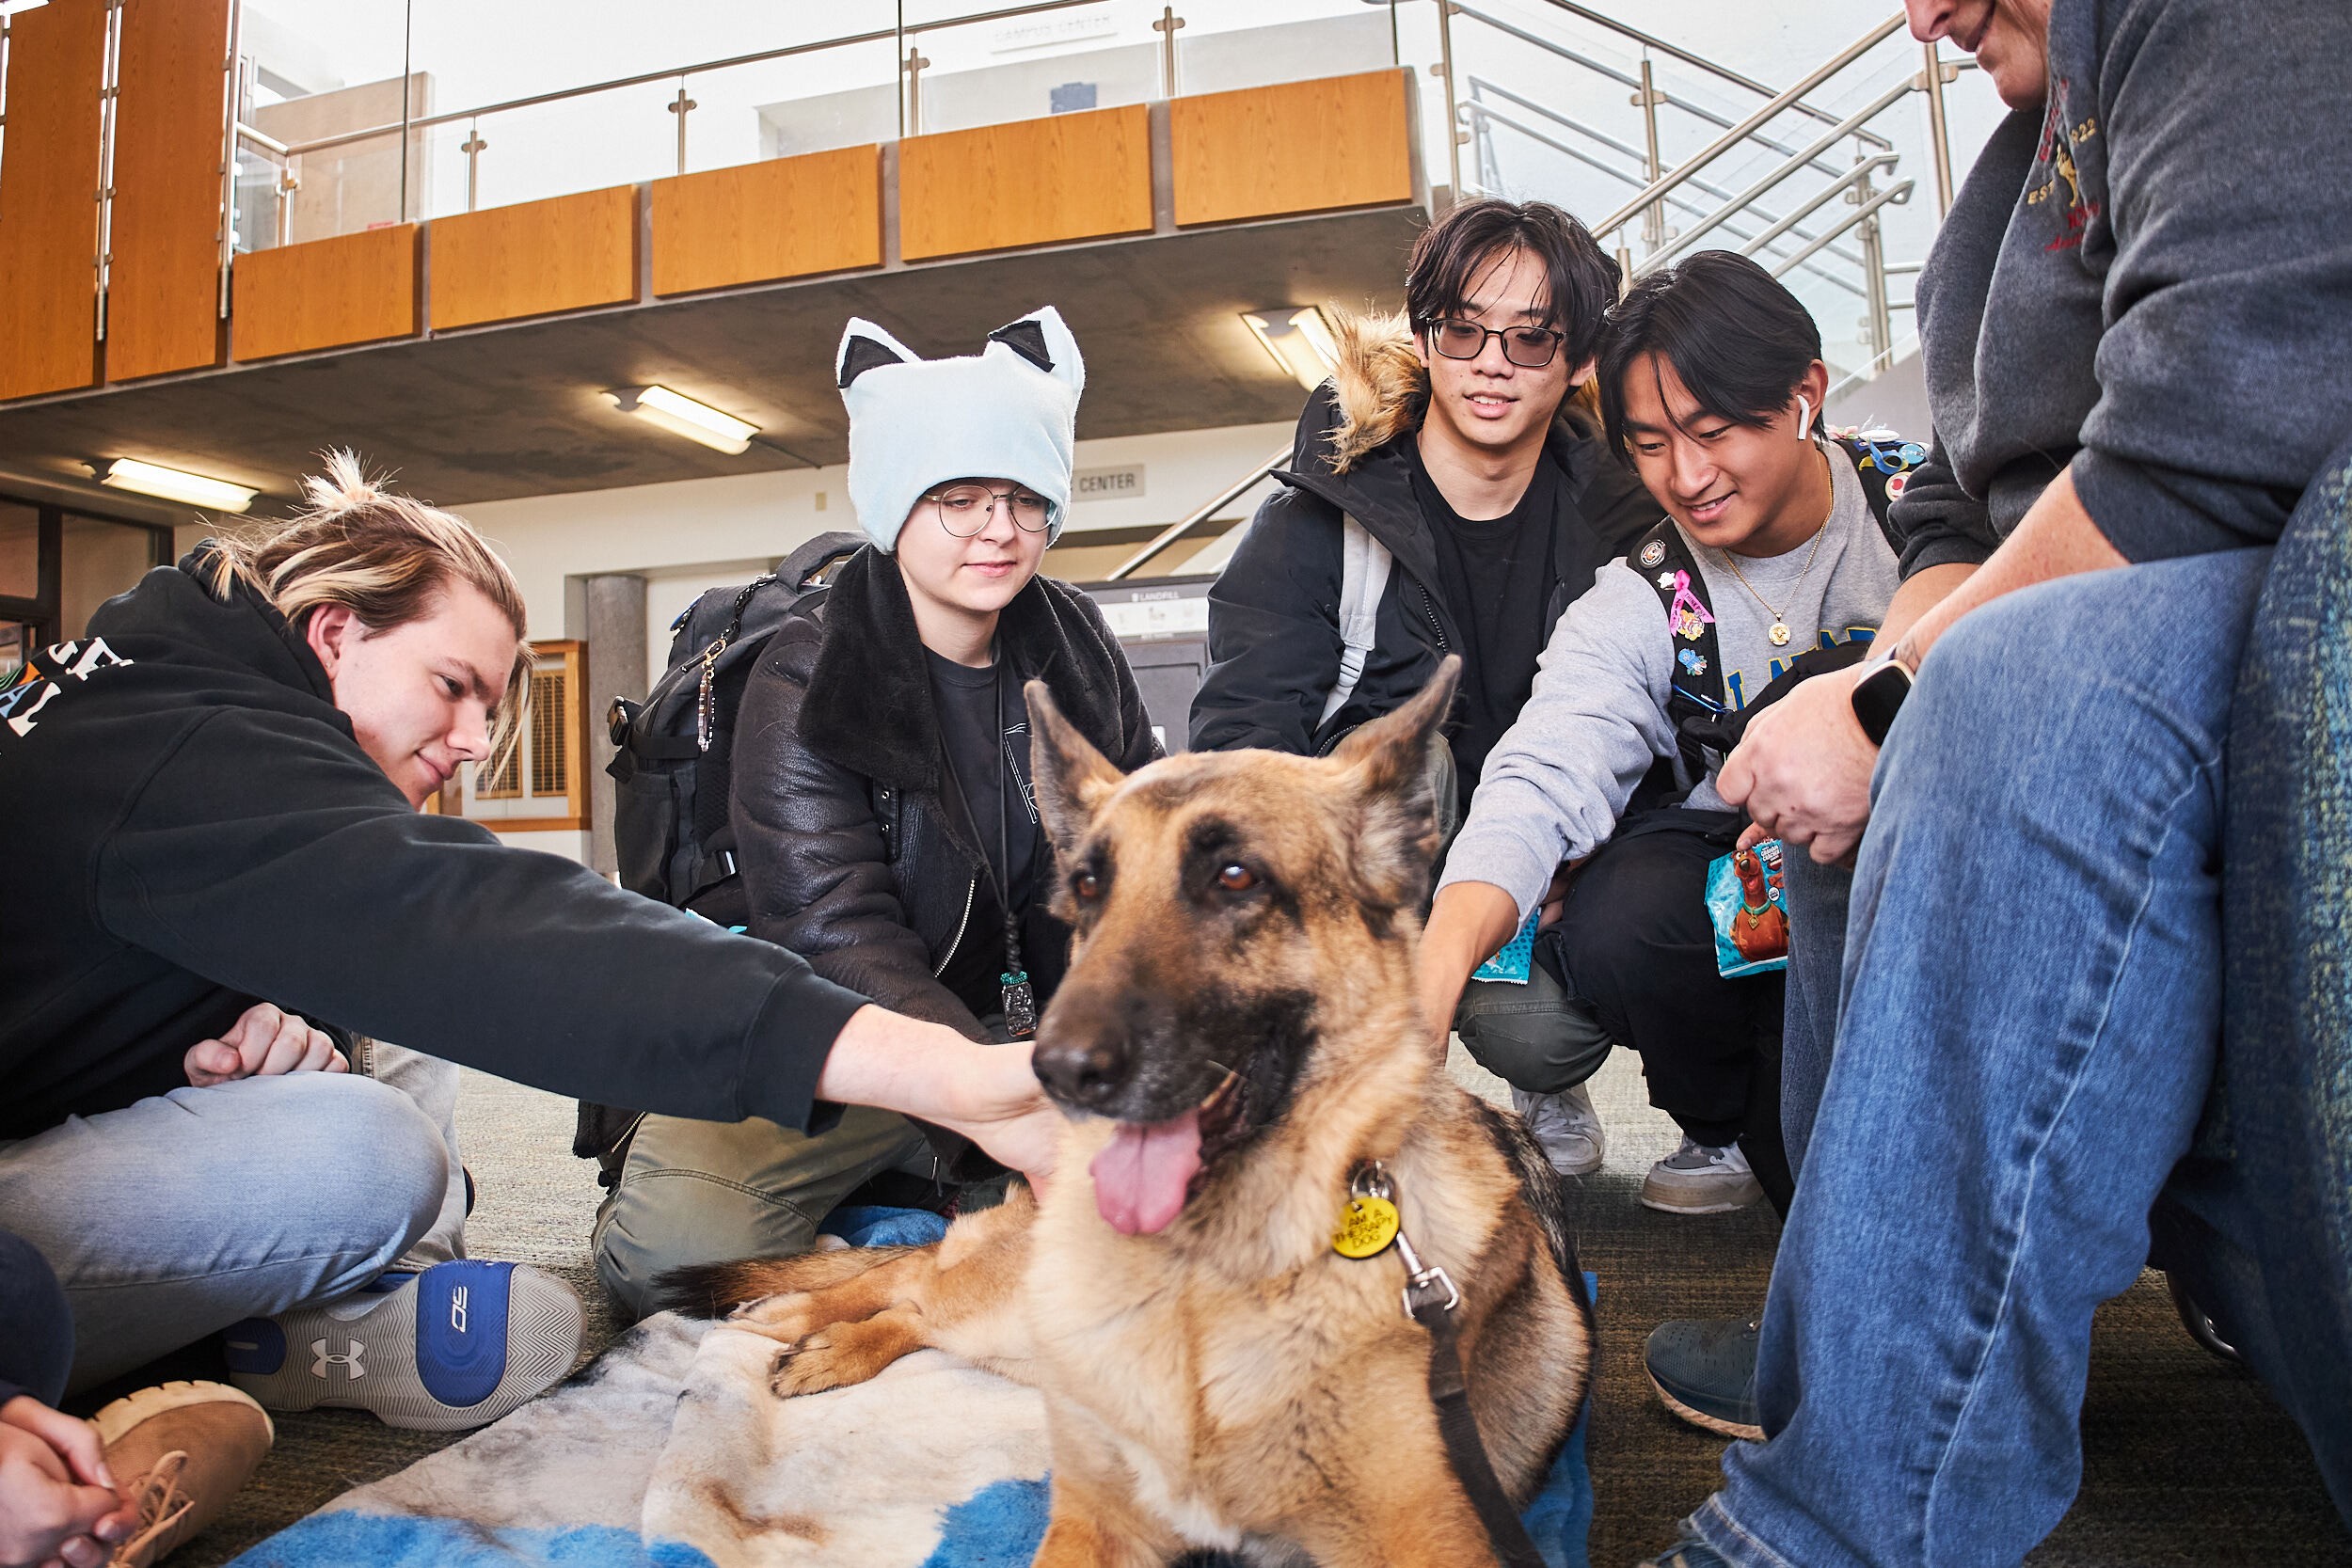 Students gathered around petting a german shepard dog